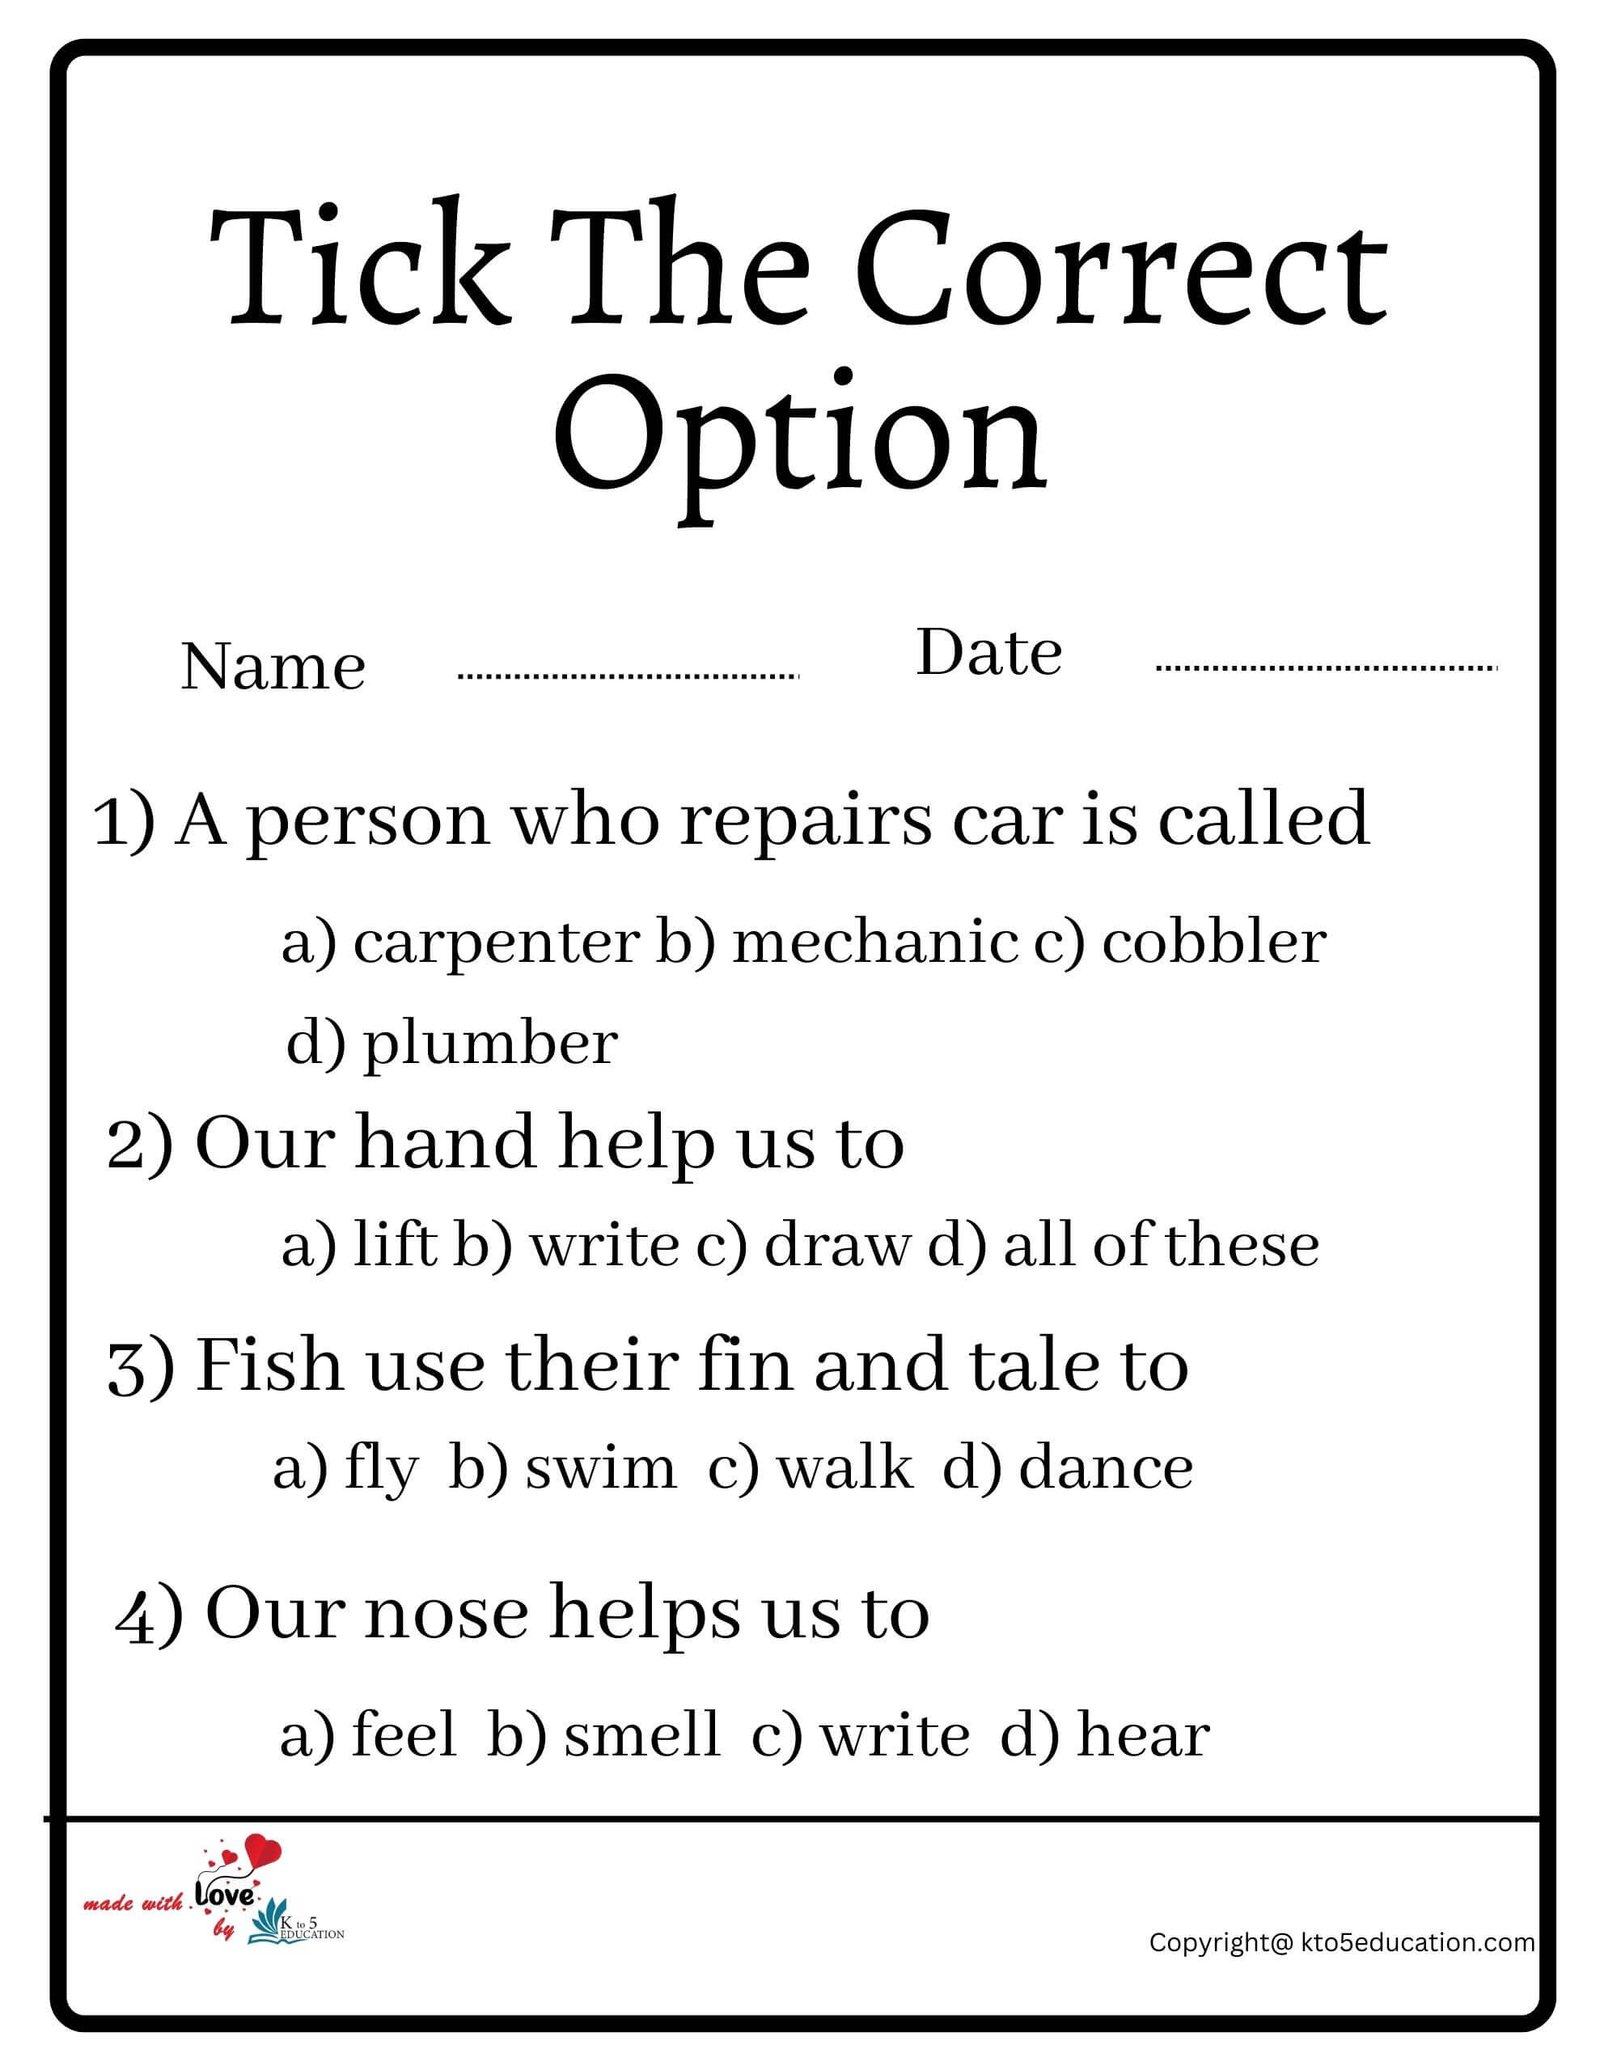 Tick The Correct Option Worksheet